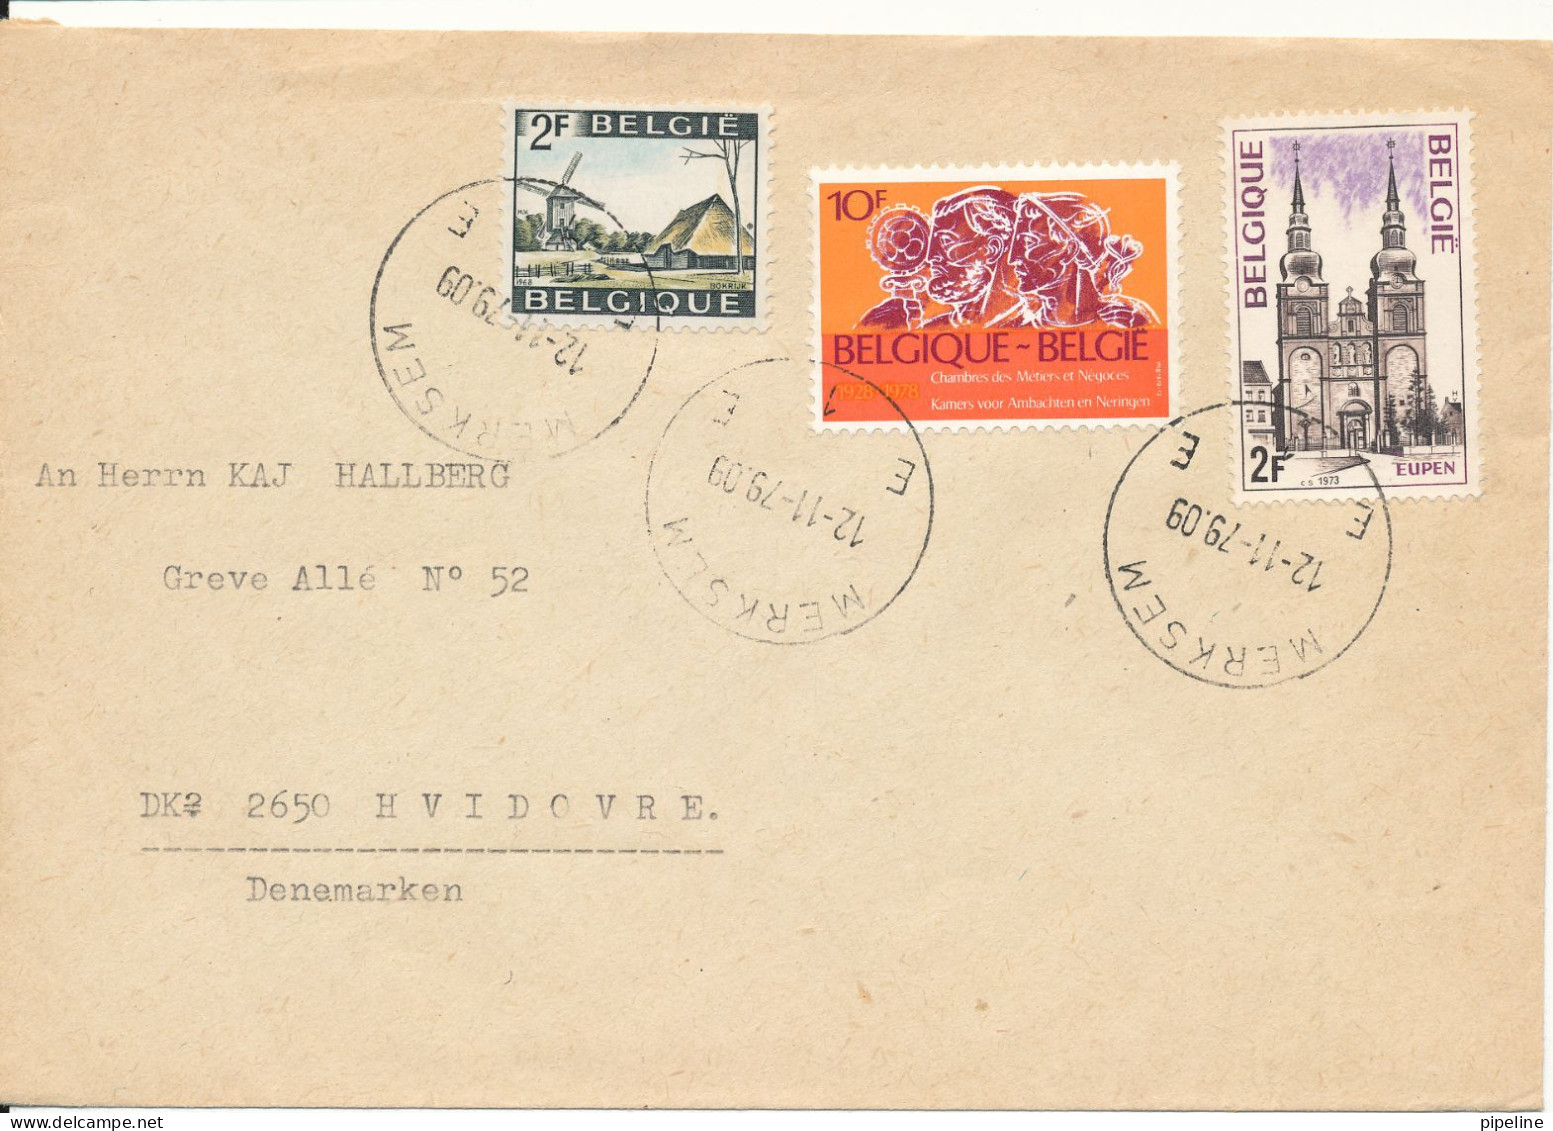 Belgium Cover Sent To Denmark Merksem 12-11-1979 Topic Stamps - Lettres & Documents